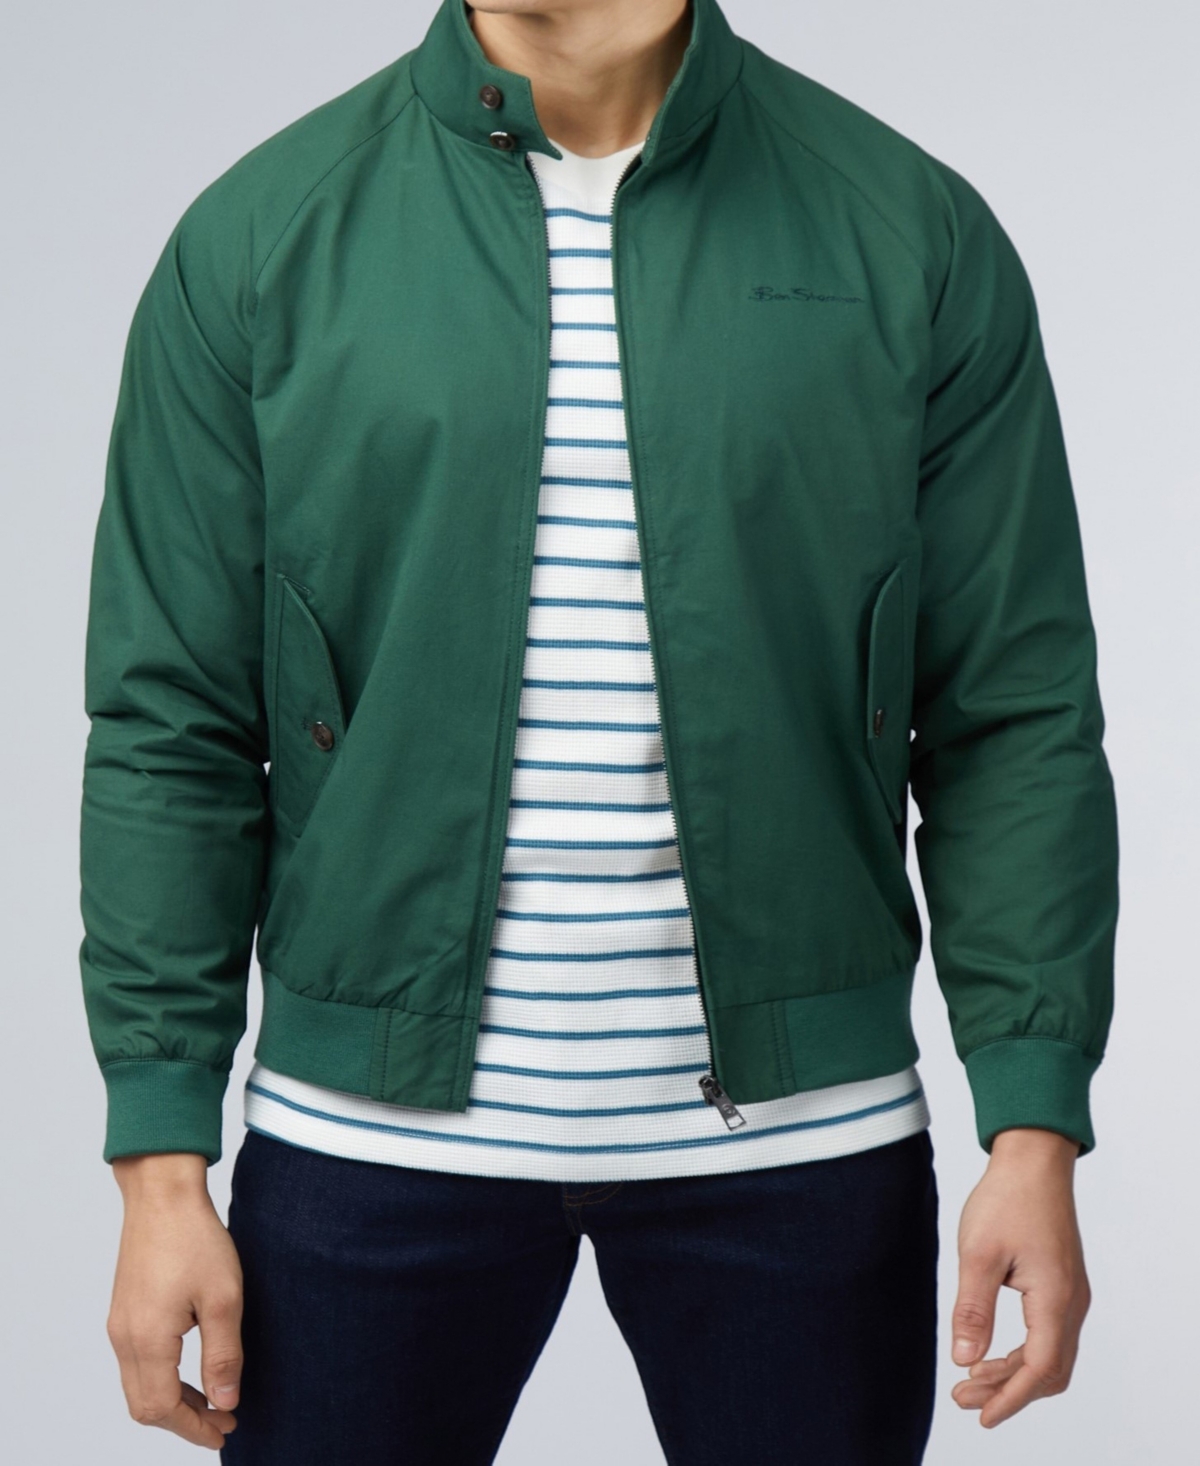 Men's Signature Harrington Long Sleeve Jacket - Green